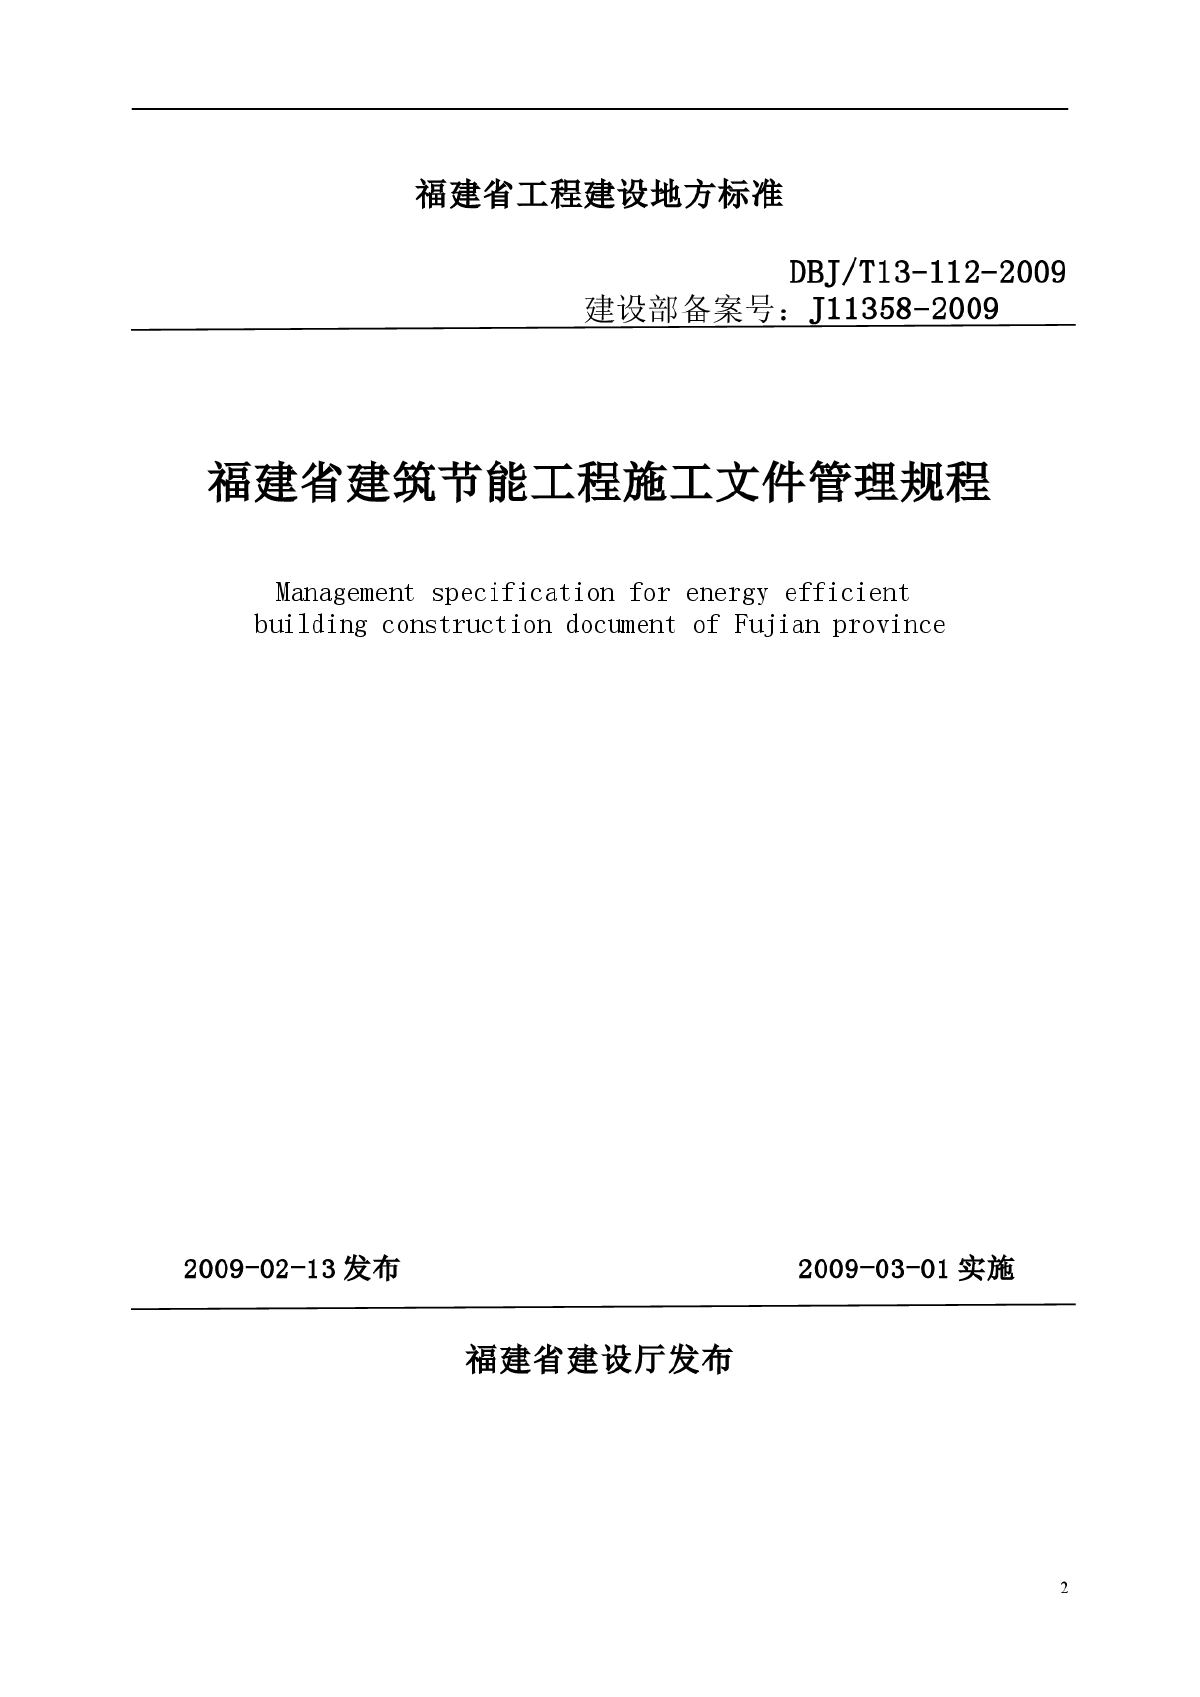 DBJ T13-112-2009 福建省建筑节能工程施工文件管理规程-图二